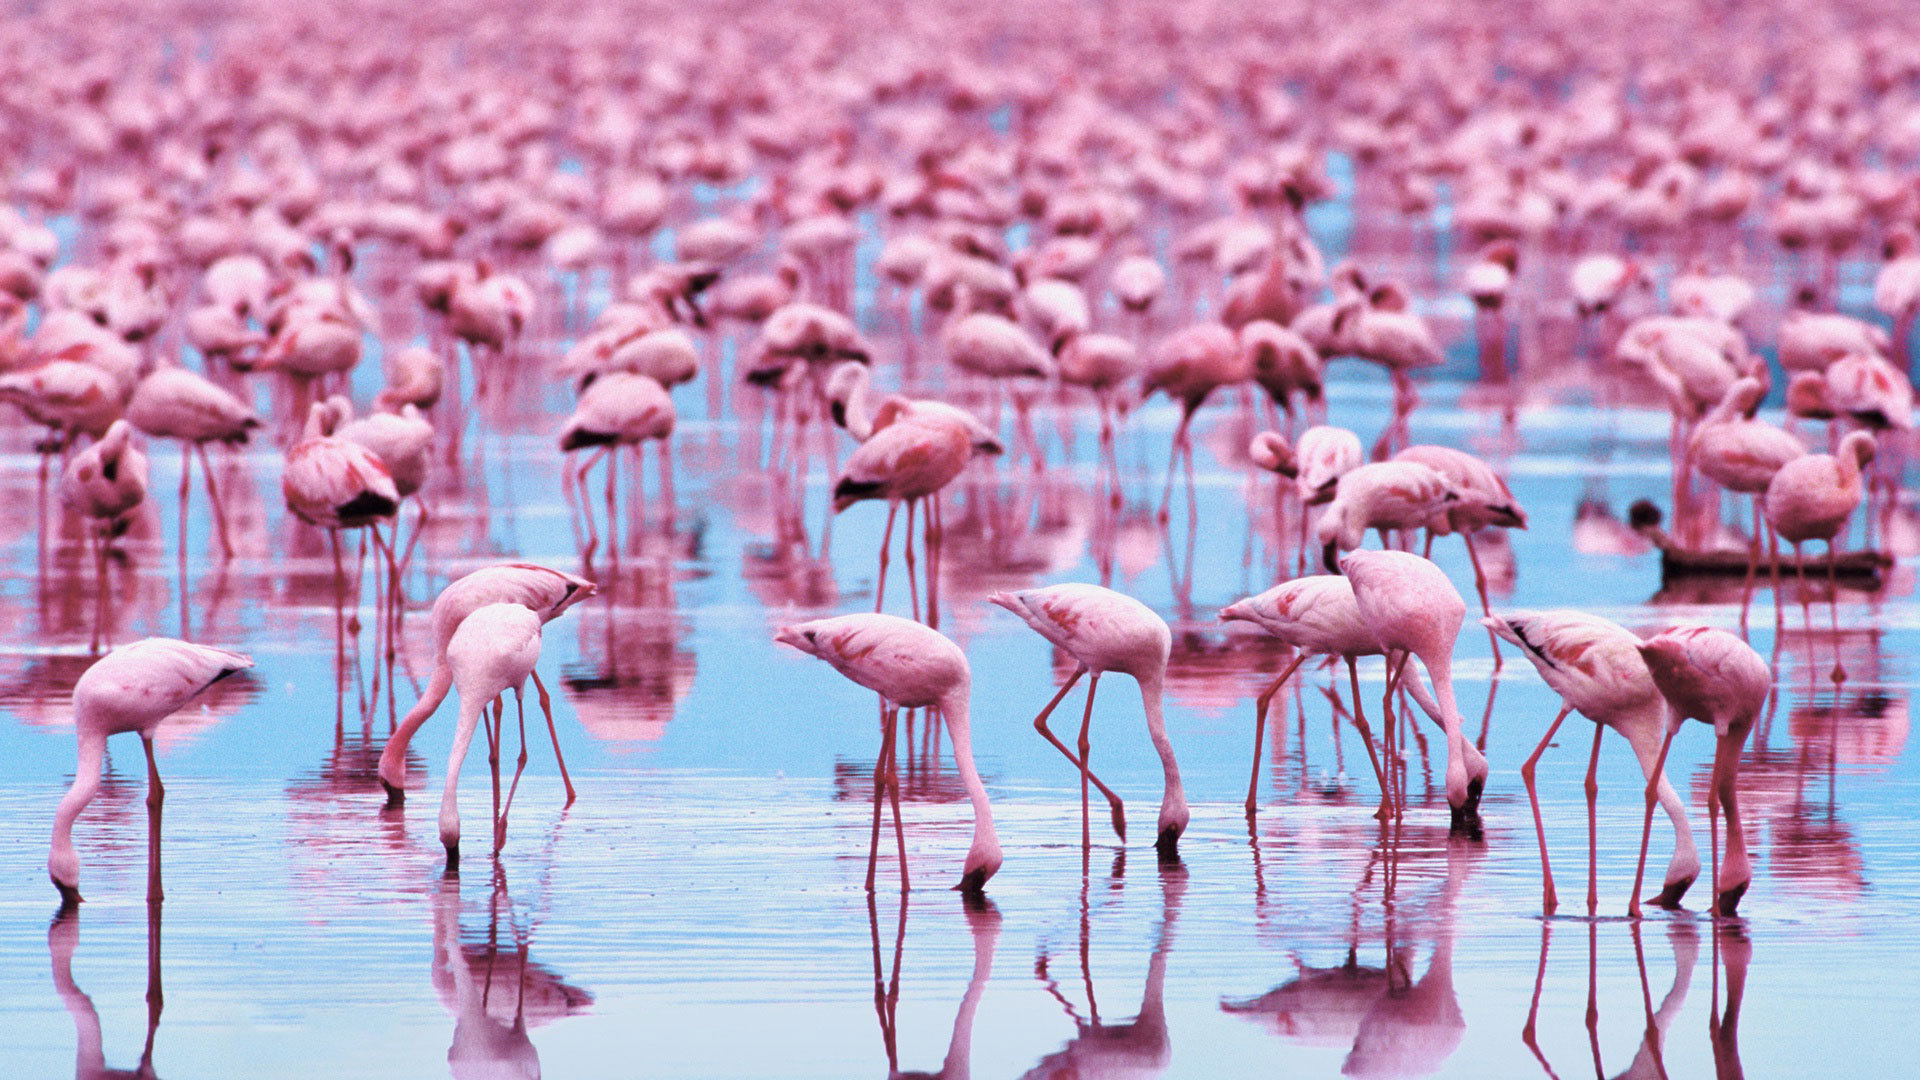 1080p Flamingo Hd Images